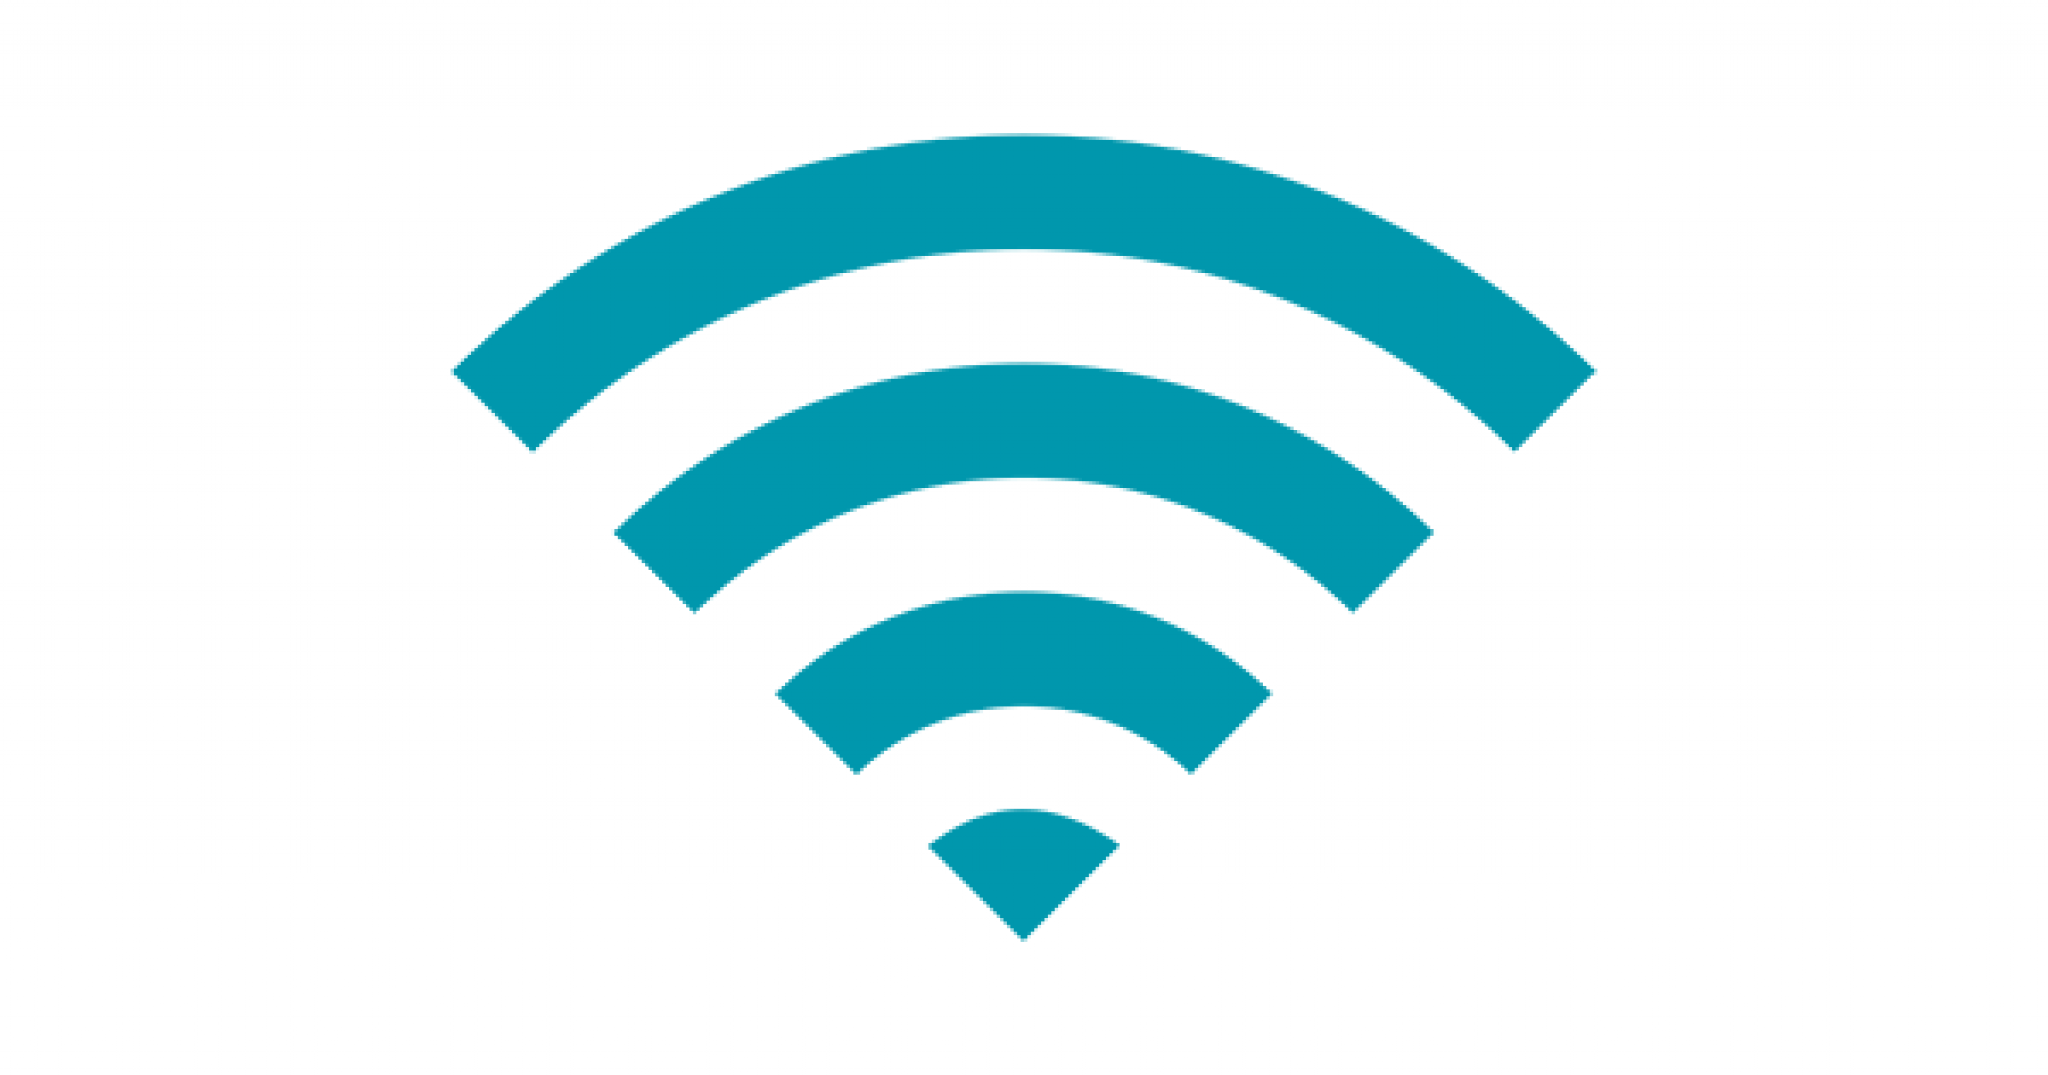 Скинь вай фай. Значок вайфая. Иконка WIFI. Wi-Fi логотип. Значок вай фай на прозрачном фоне.